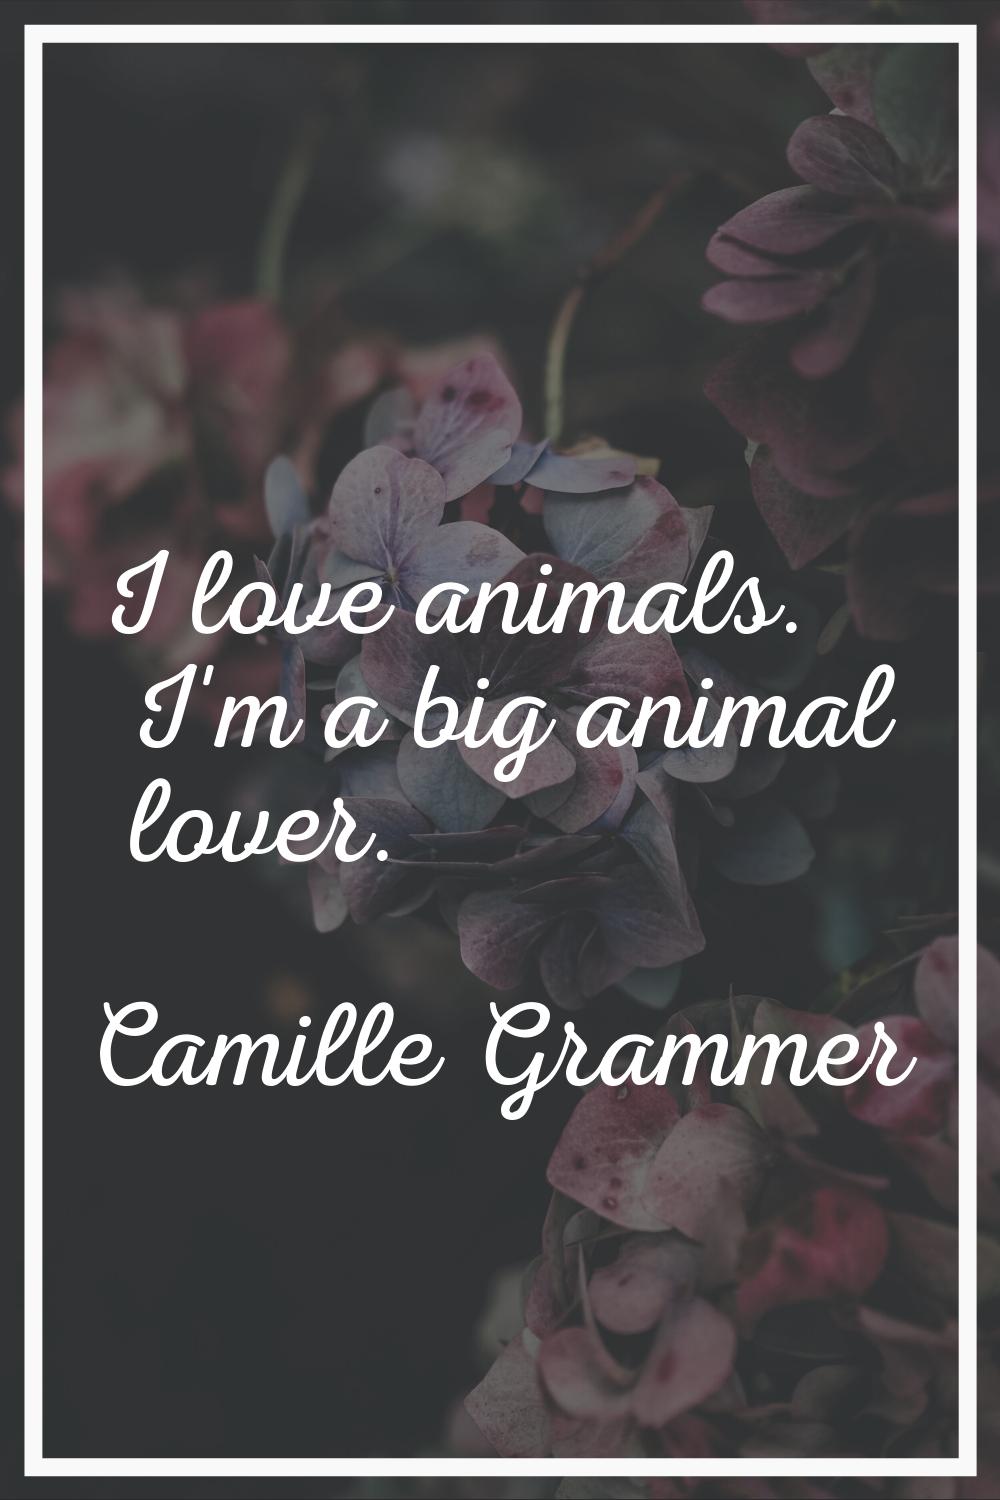 I love animals. I'm a big animal lover.